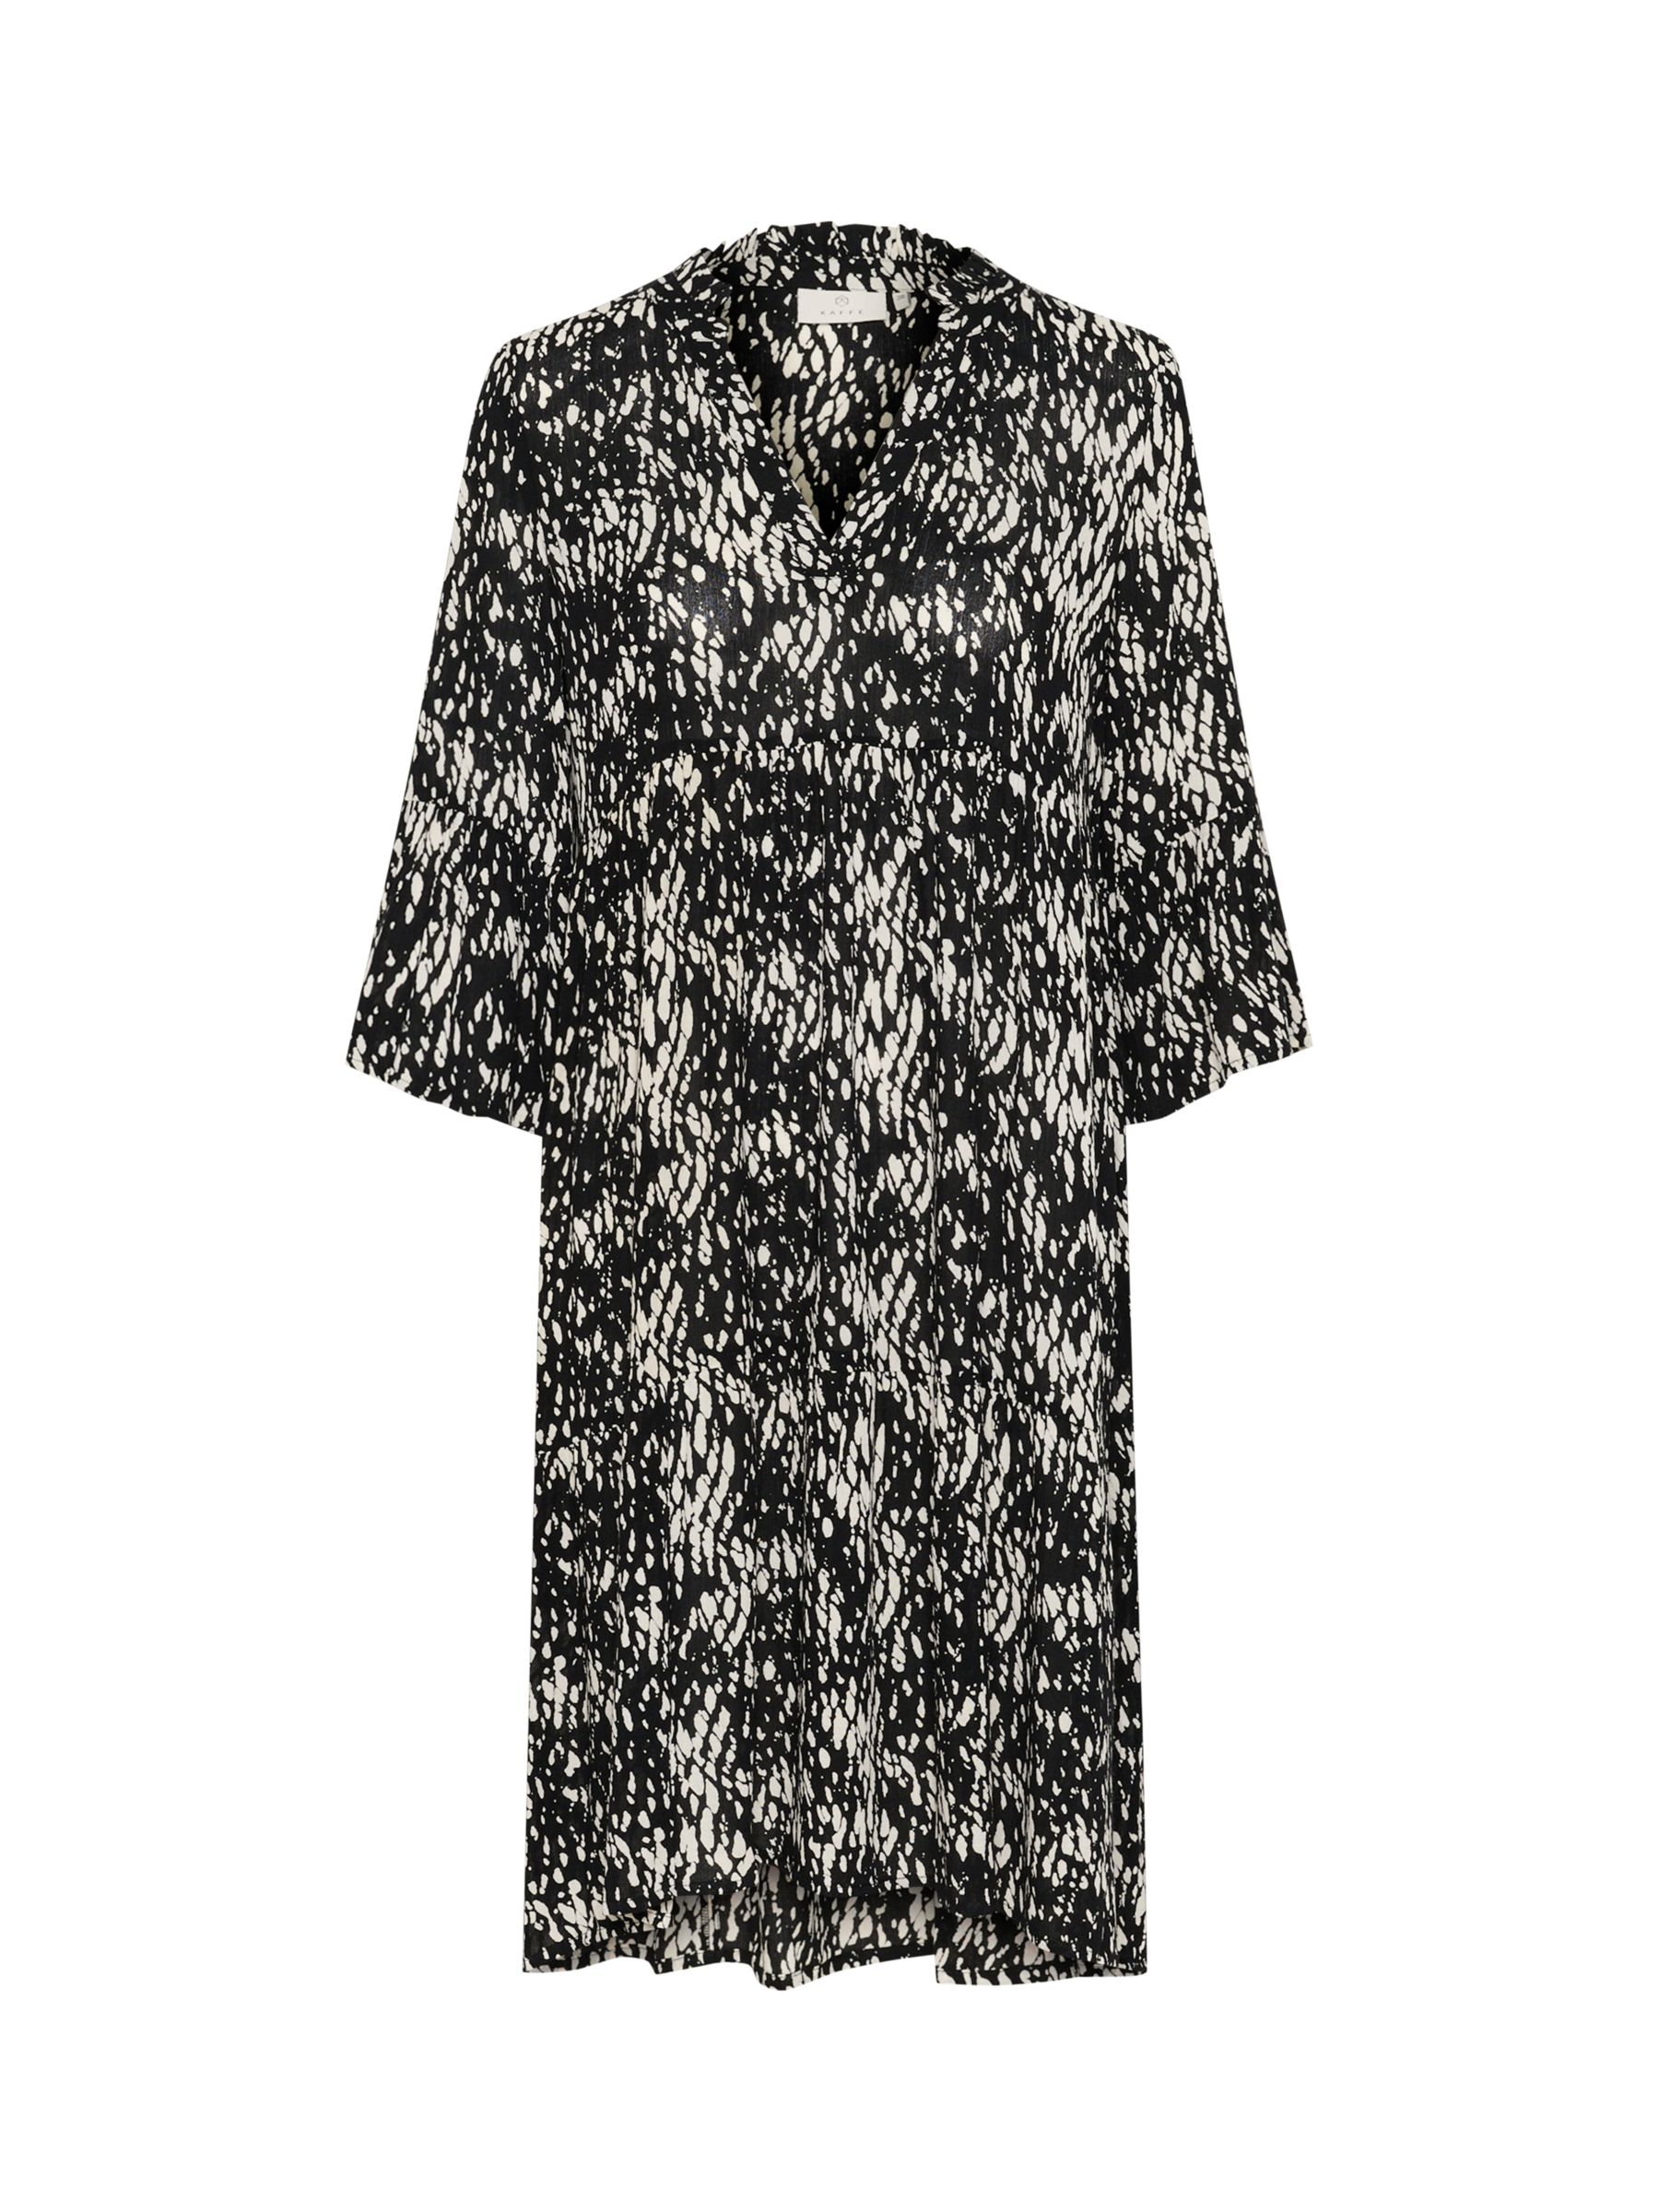 KAFFE Hera Amber Abstract Graphic Print Dress, Black/White, 8